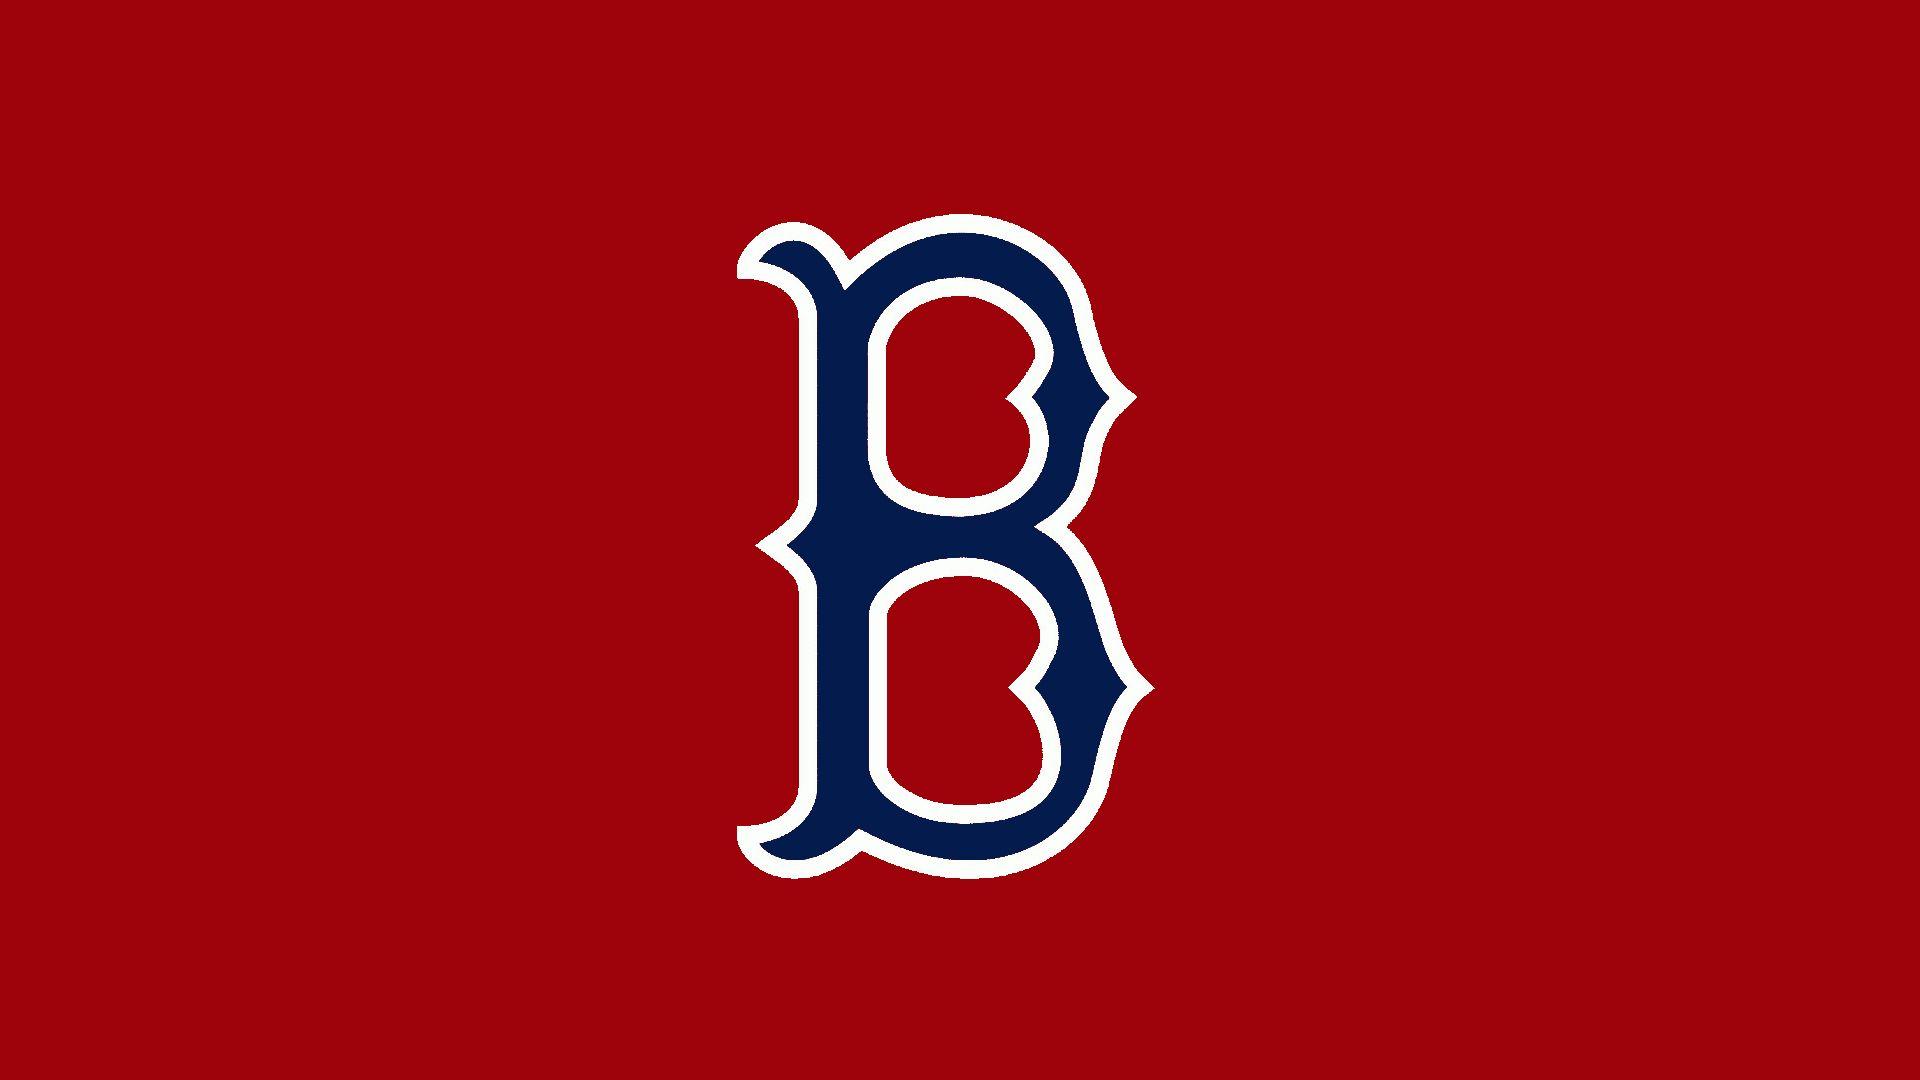 Boston Baseball Logo - Free Boston Red Sox Logo Download, Download Free Clip Art, Free Clip ...